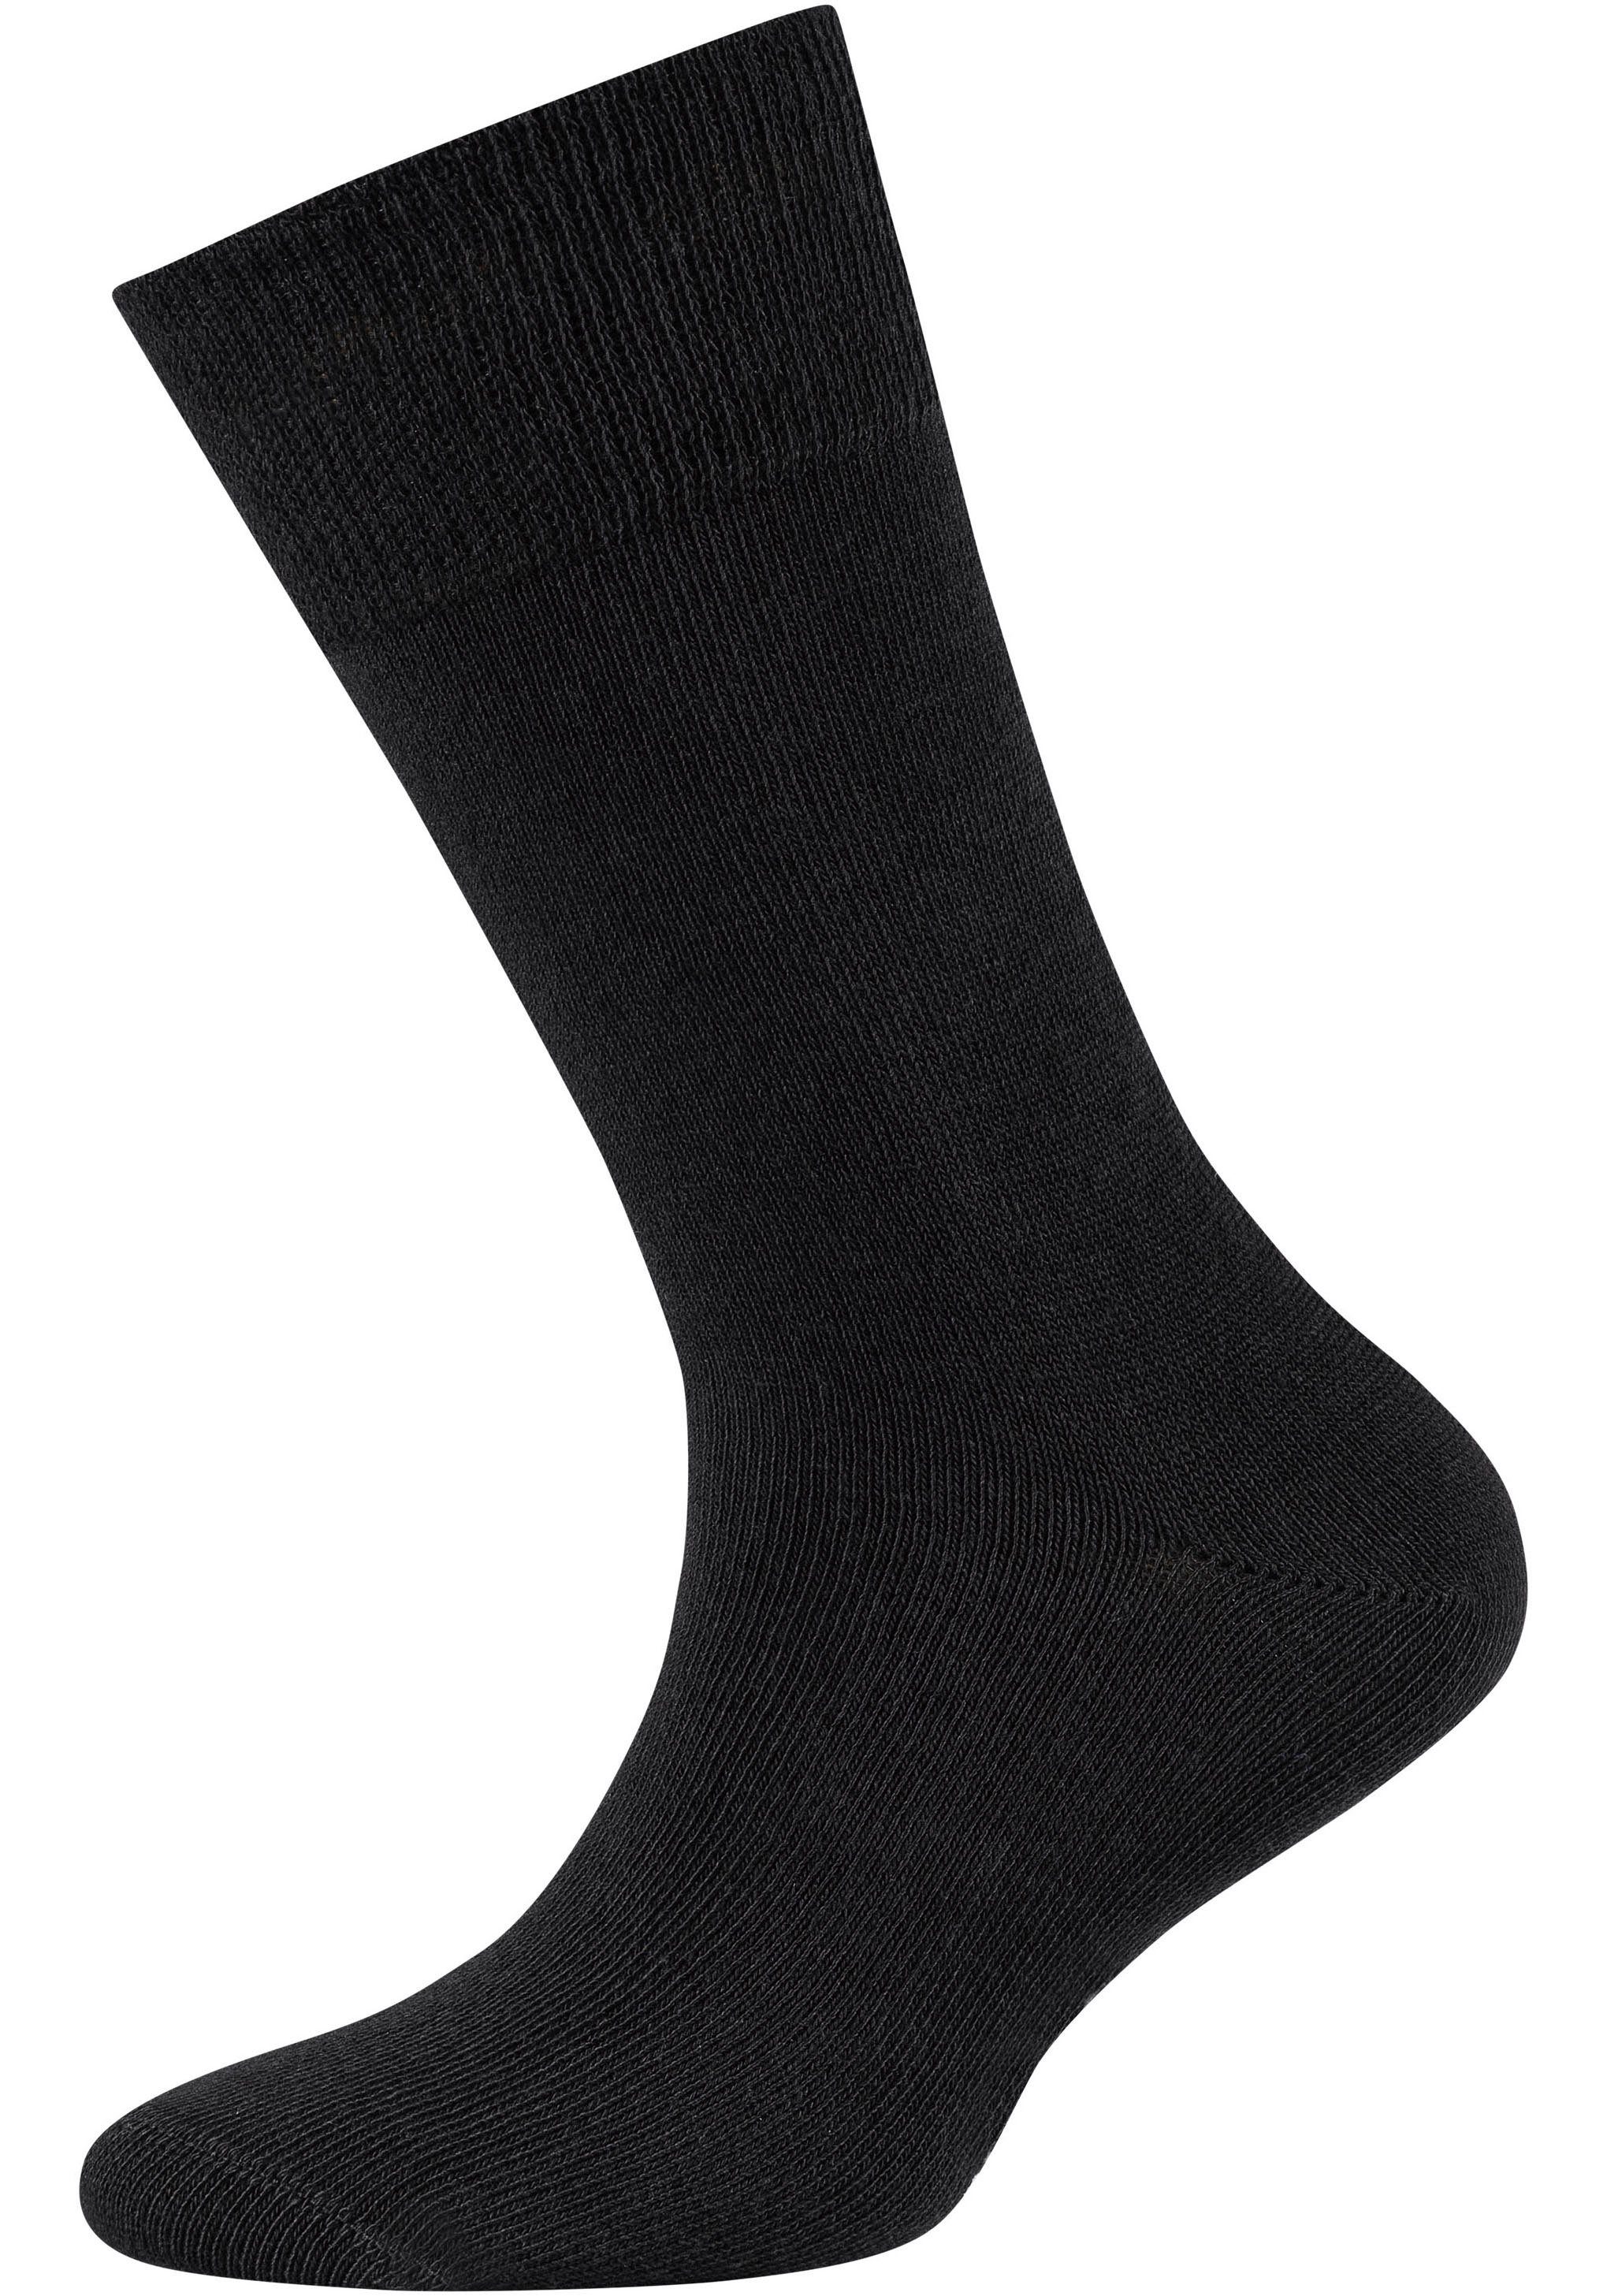 Anteil gekämmter Besonders (Packung, Zehenspitze Ferse 6-Paar) bequem Hoher und Socken Camano Baumwolle, dank verstärkter an